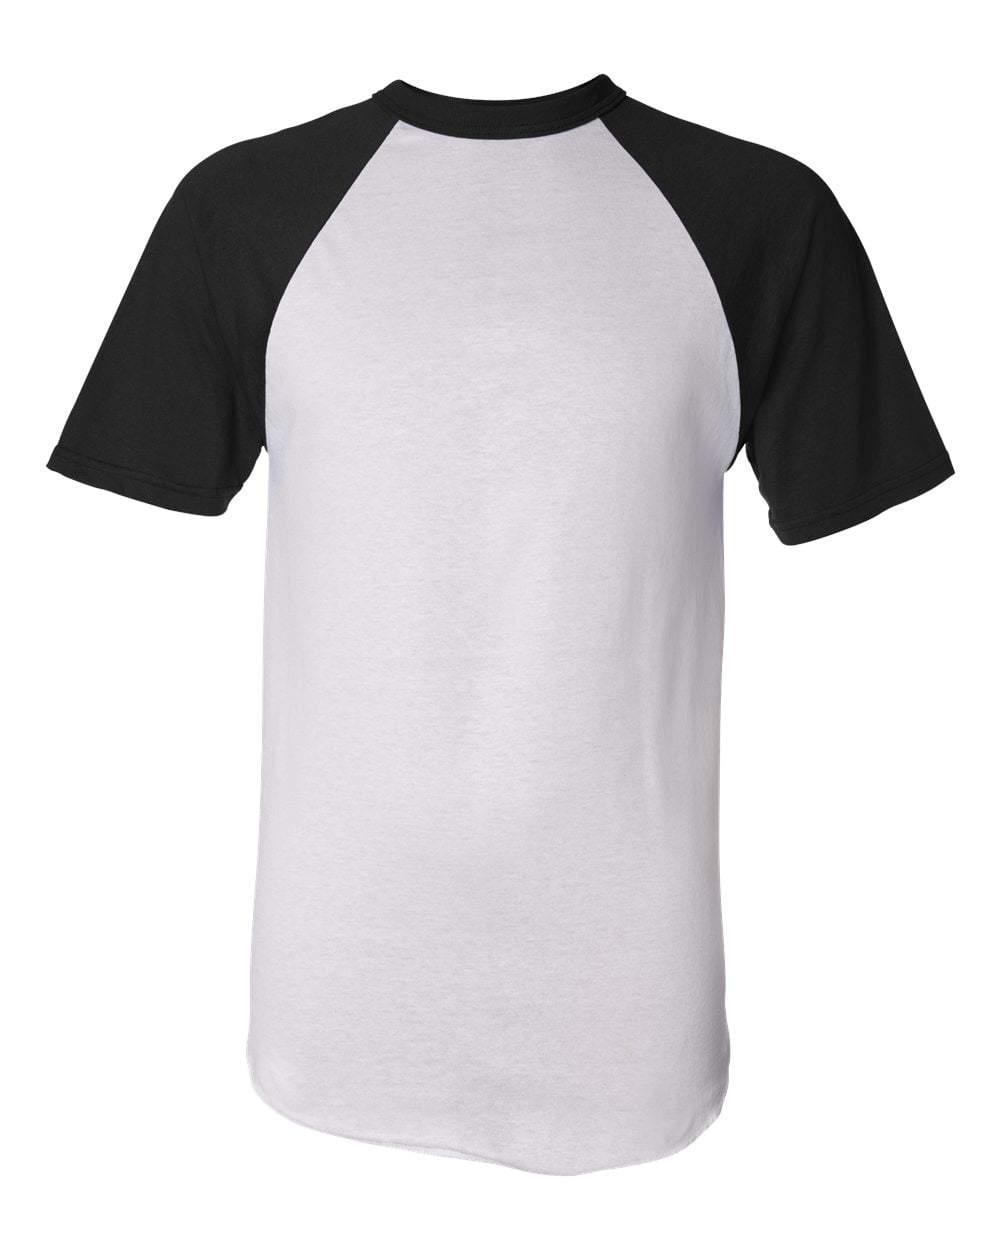 Augusta Sportswear 50/50 Short-Sleeve Raglan T-Shirt (423) White/Maroon, L  